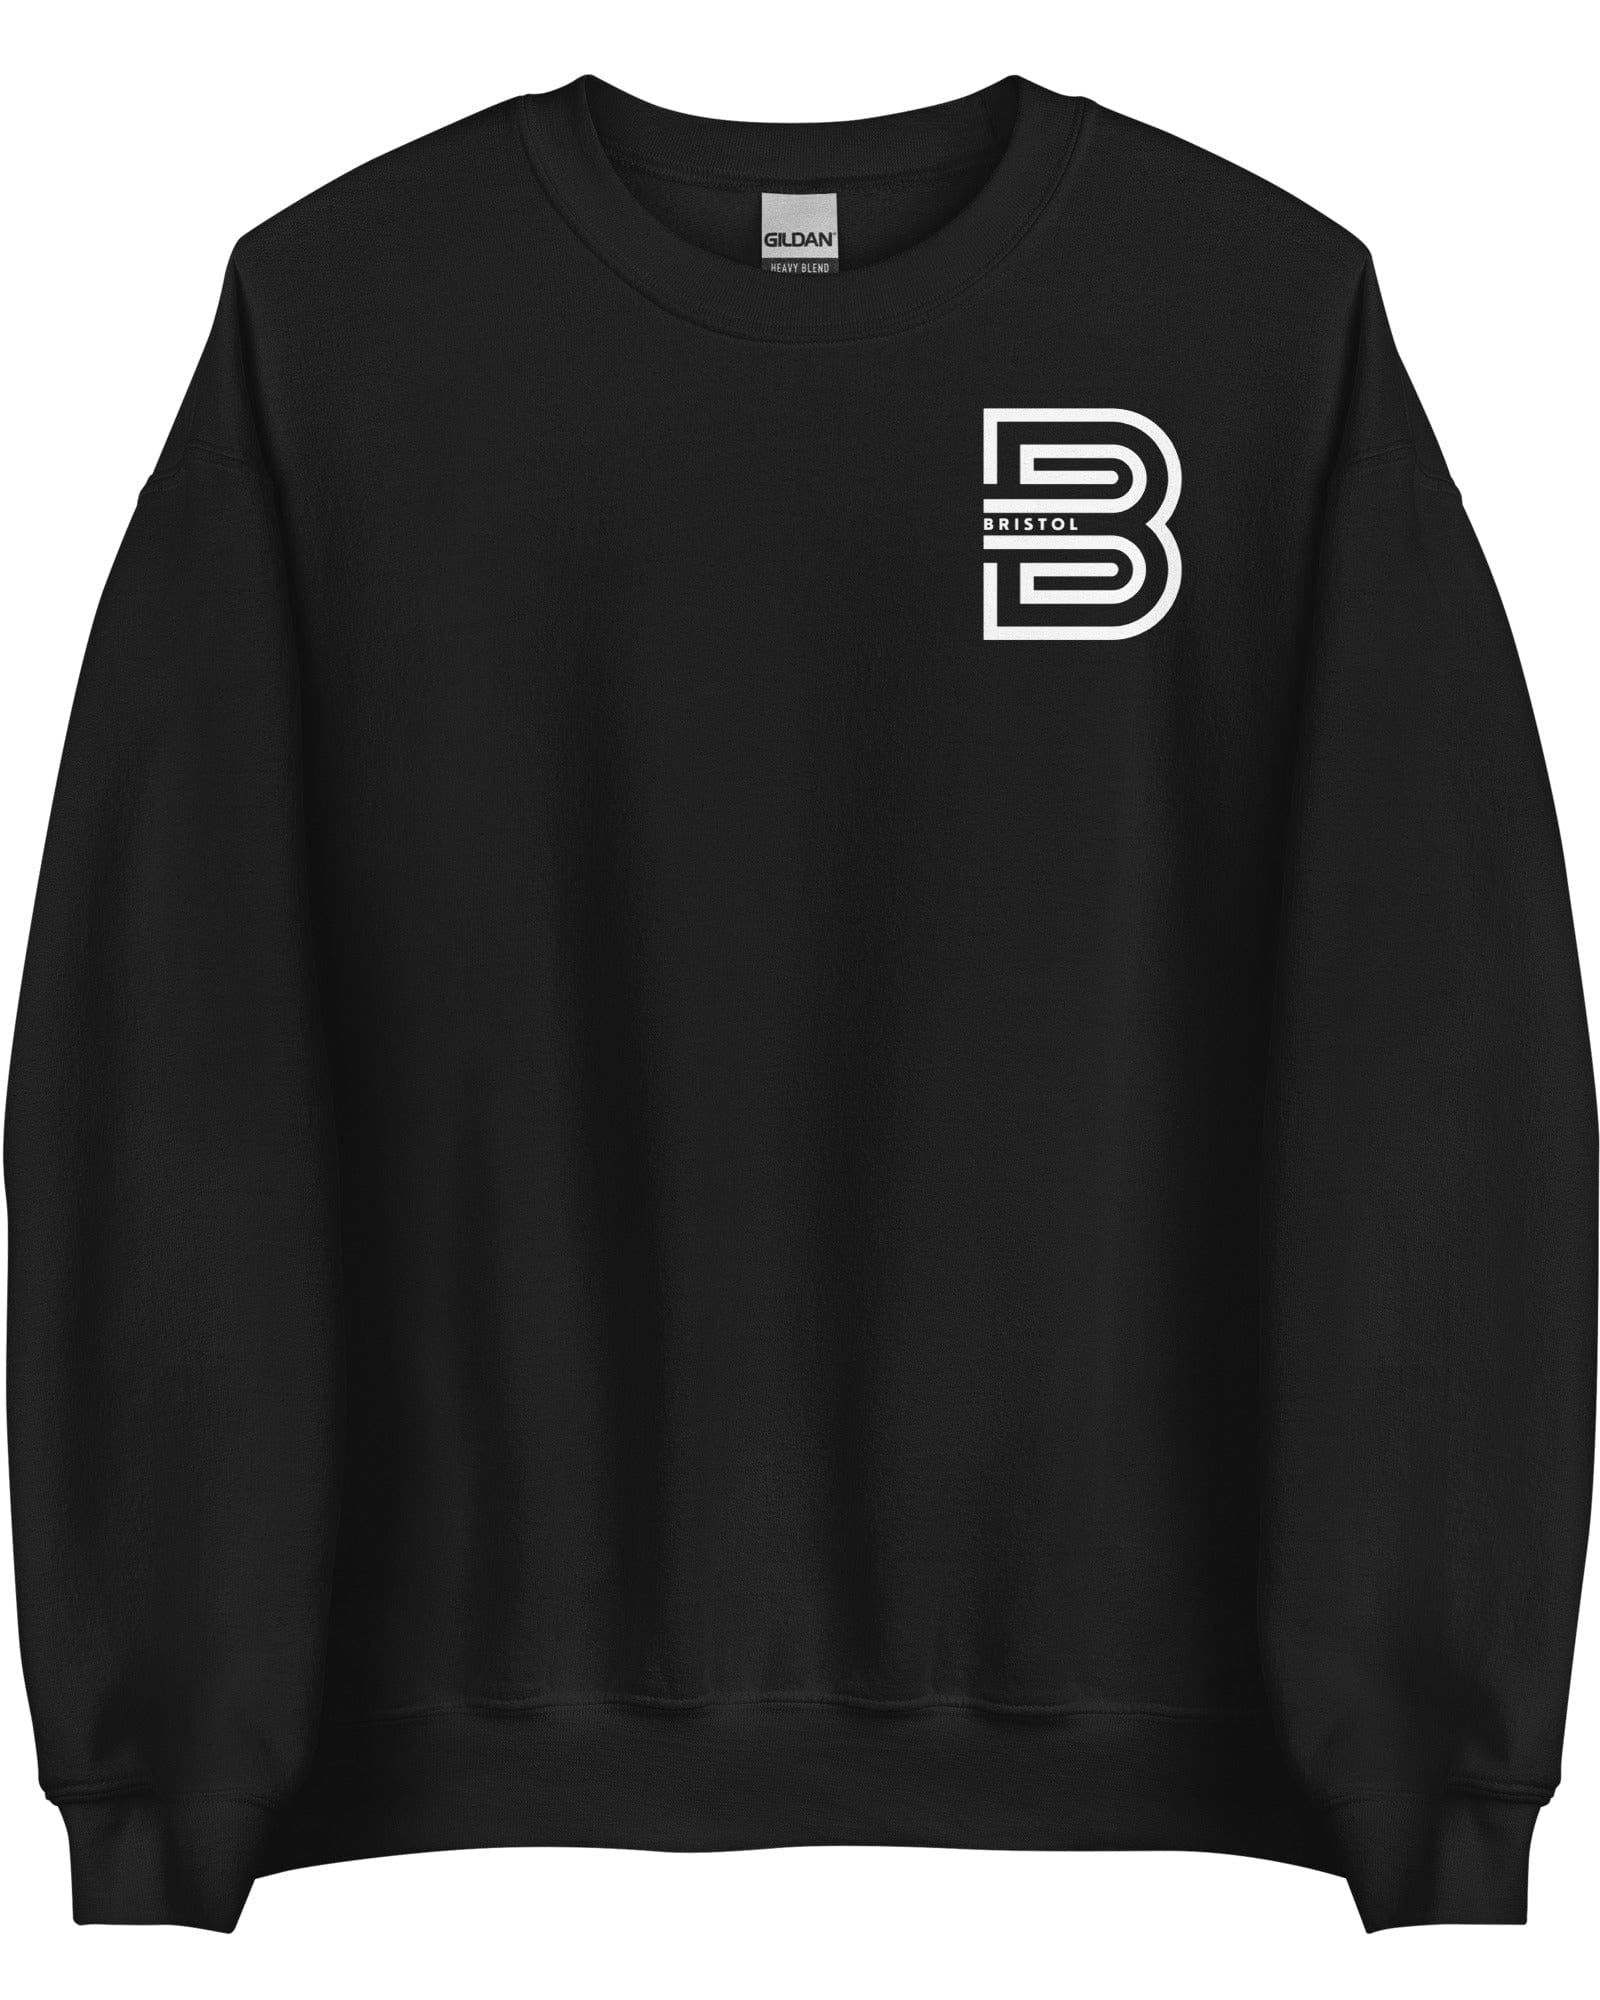 Bristol B Sweatshirt Black / S Sweatshirt Jolly & Goode